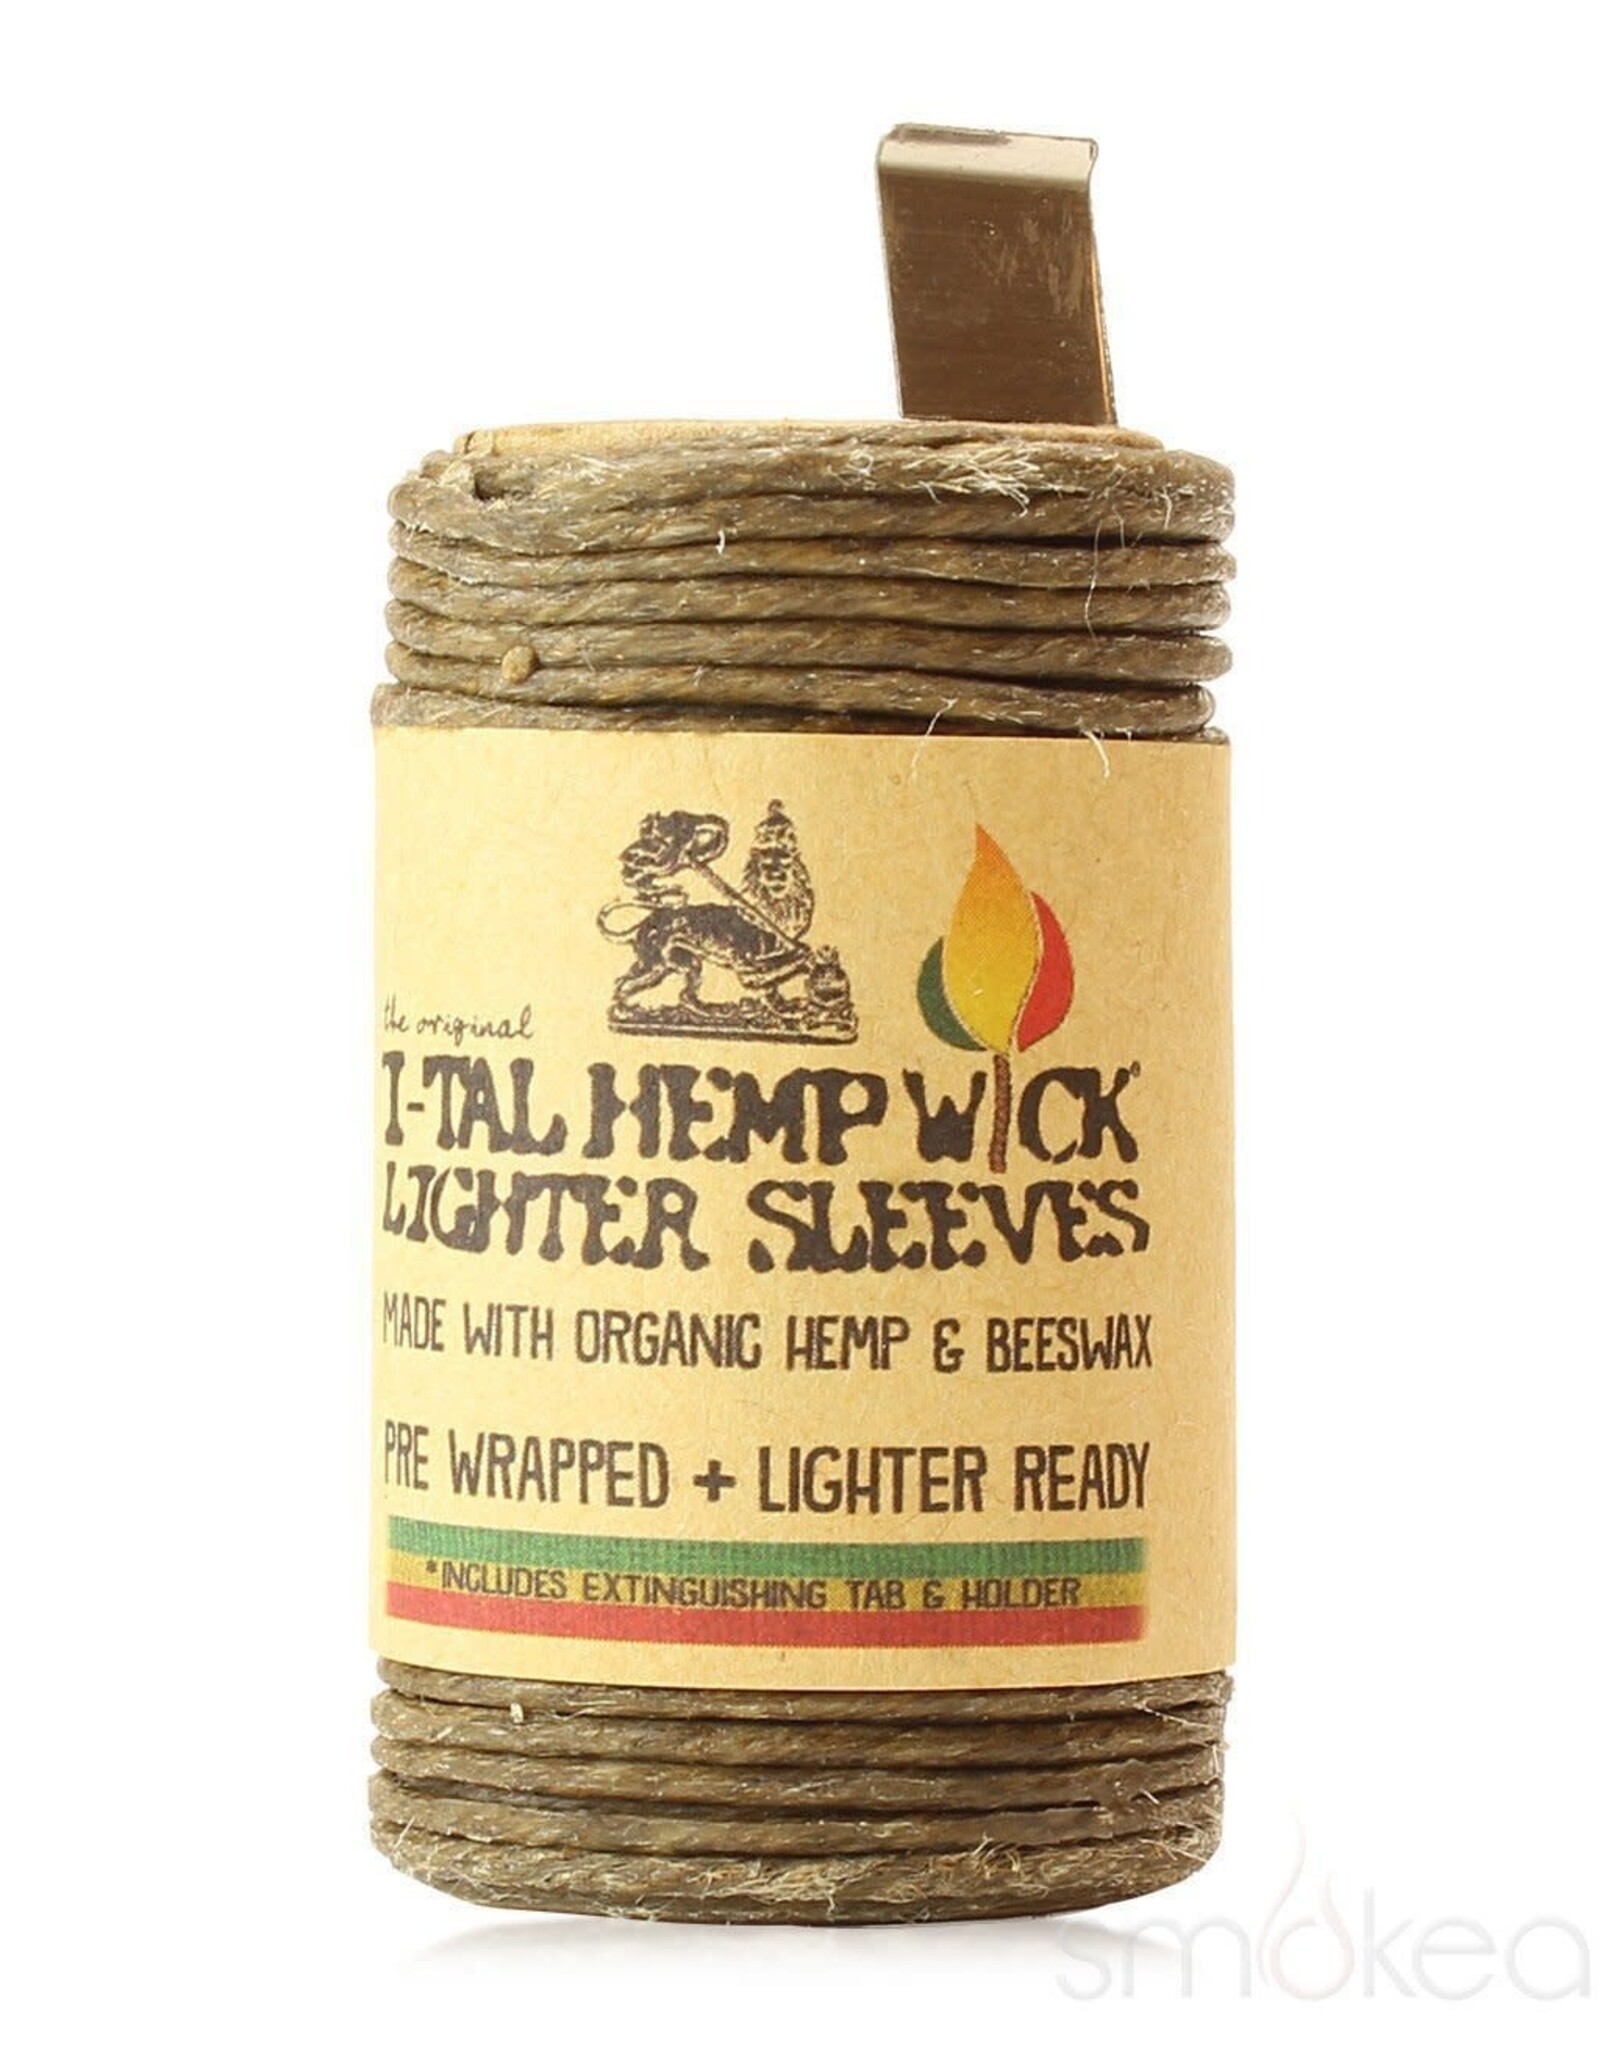 I-Tal hemp wick Bic lighter sleeve 15.5 ft